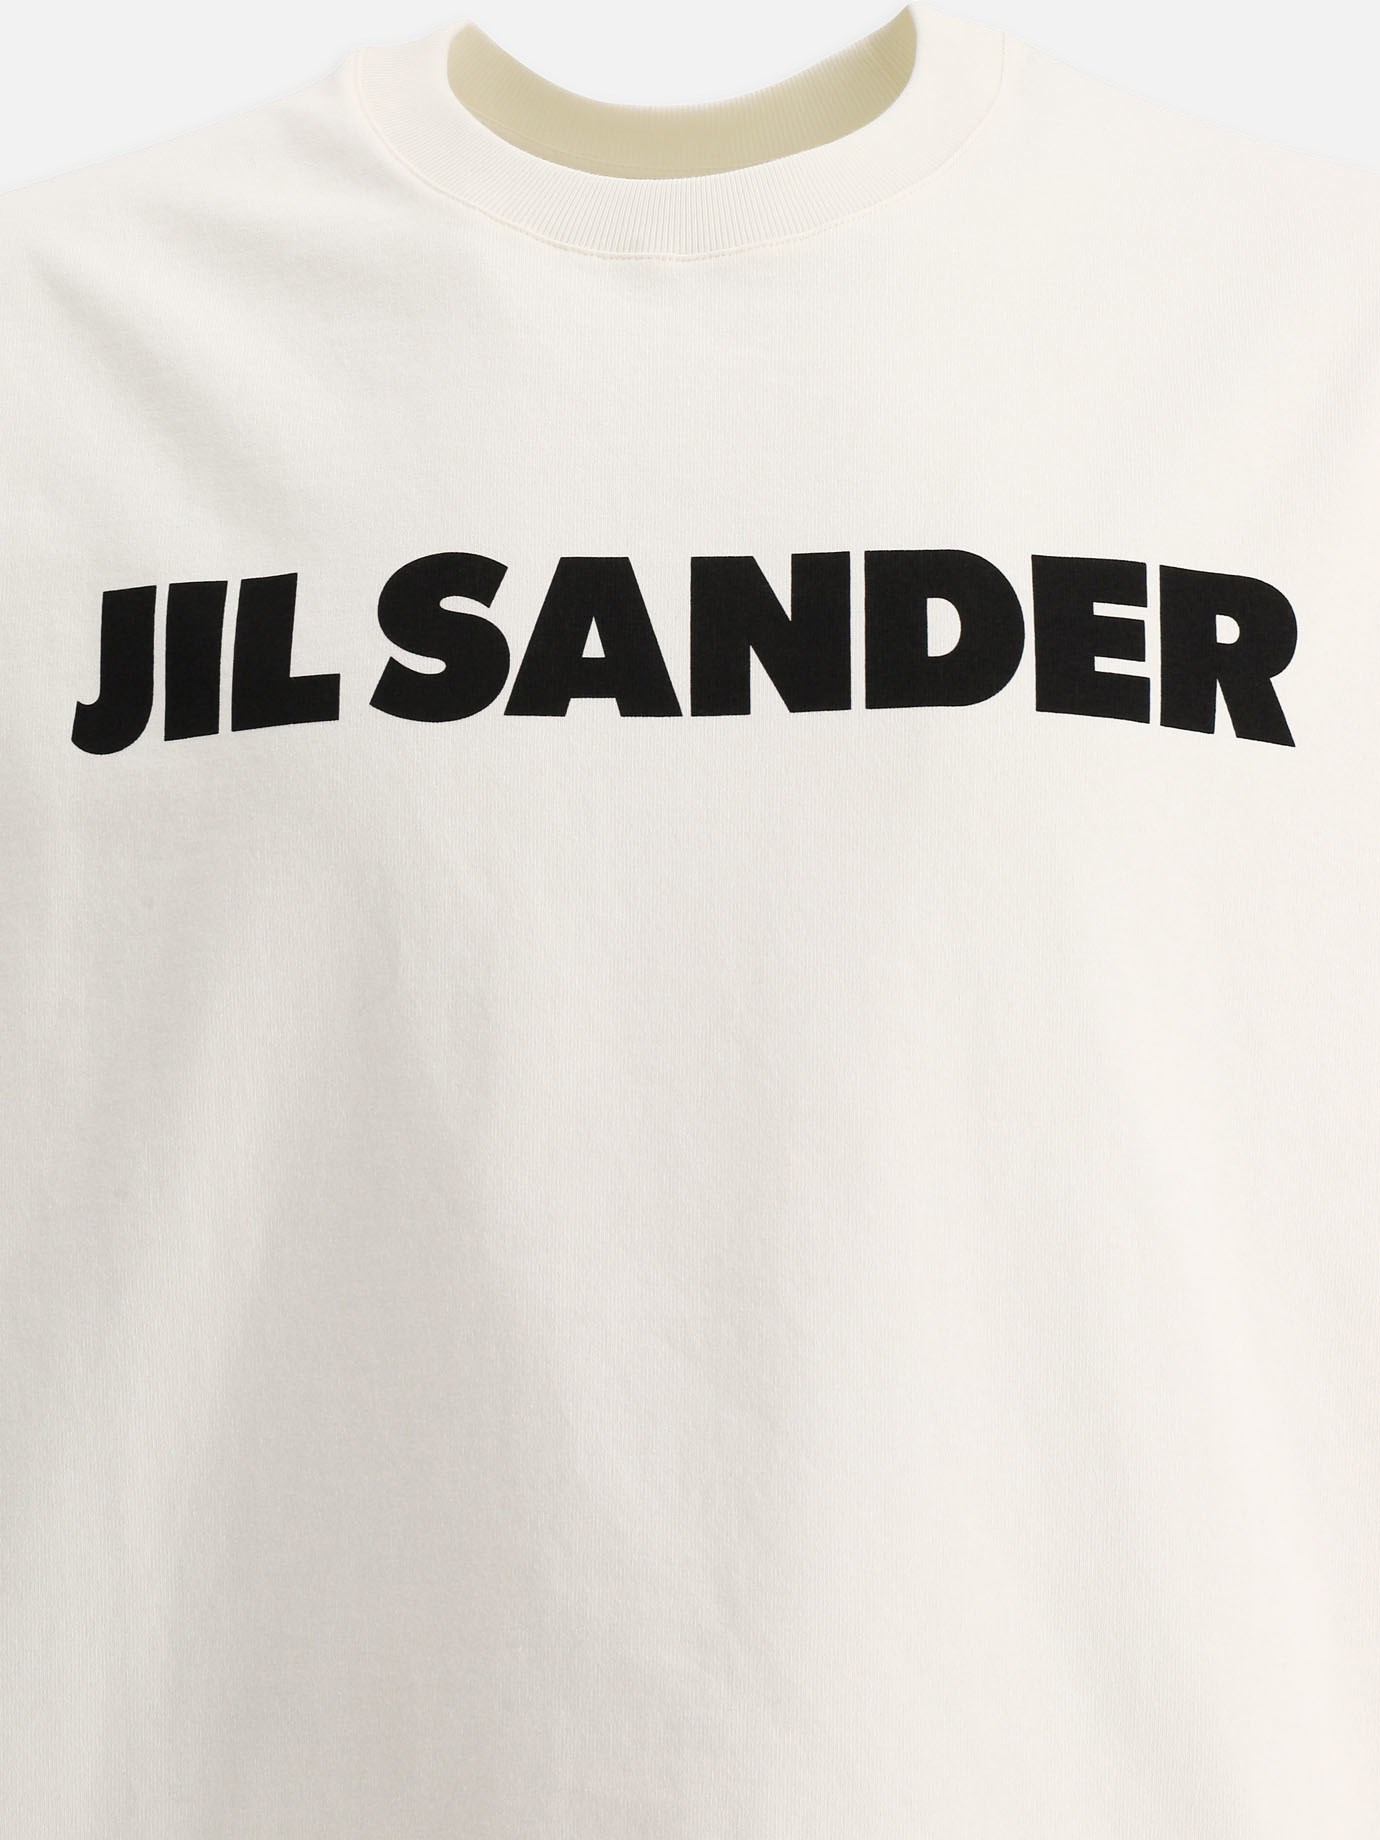  Jil Sander  t-shirt by Jil Sander